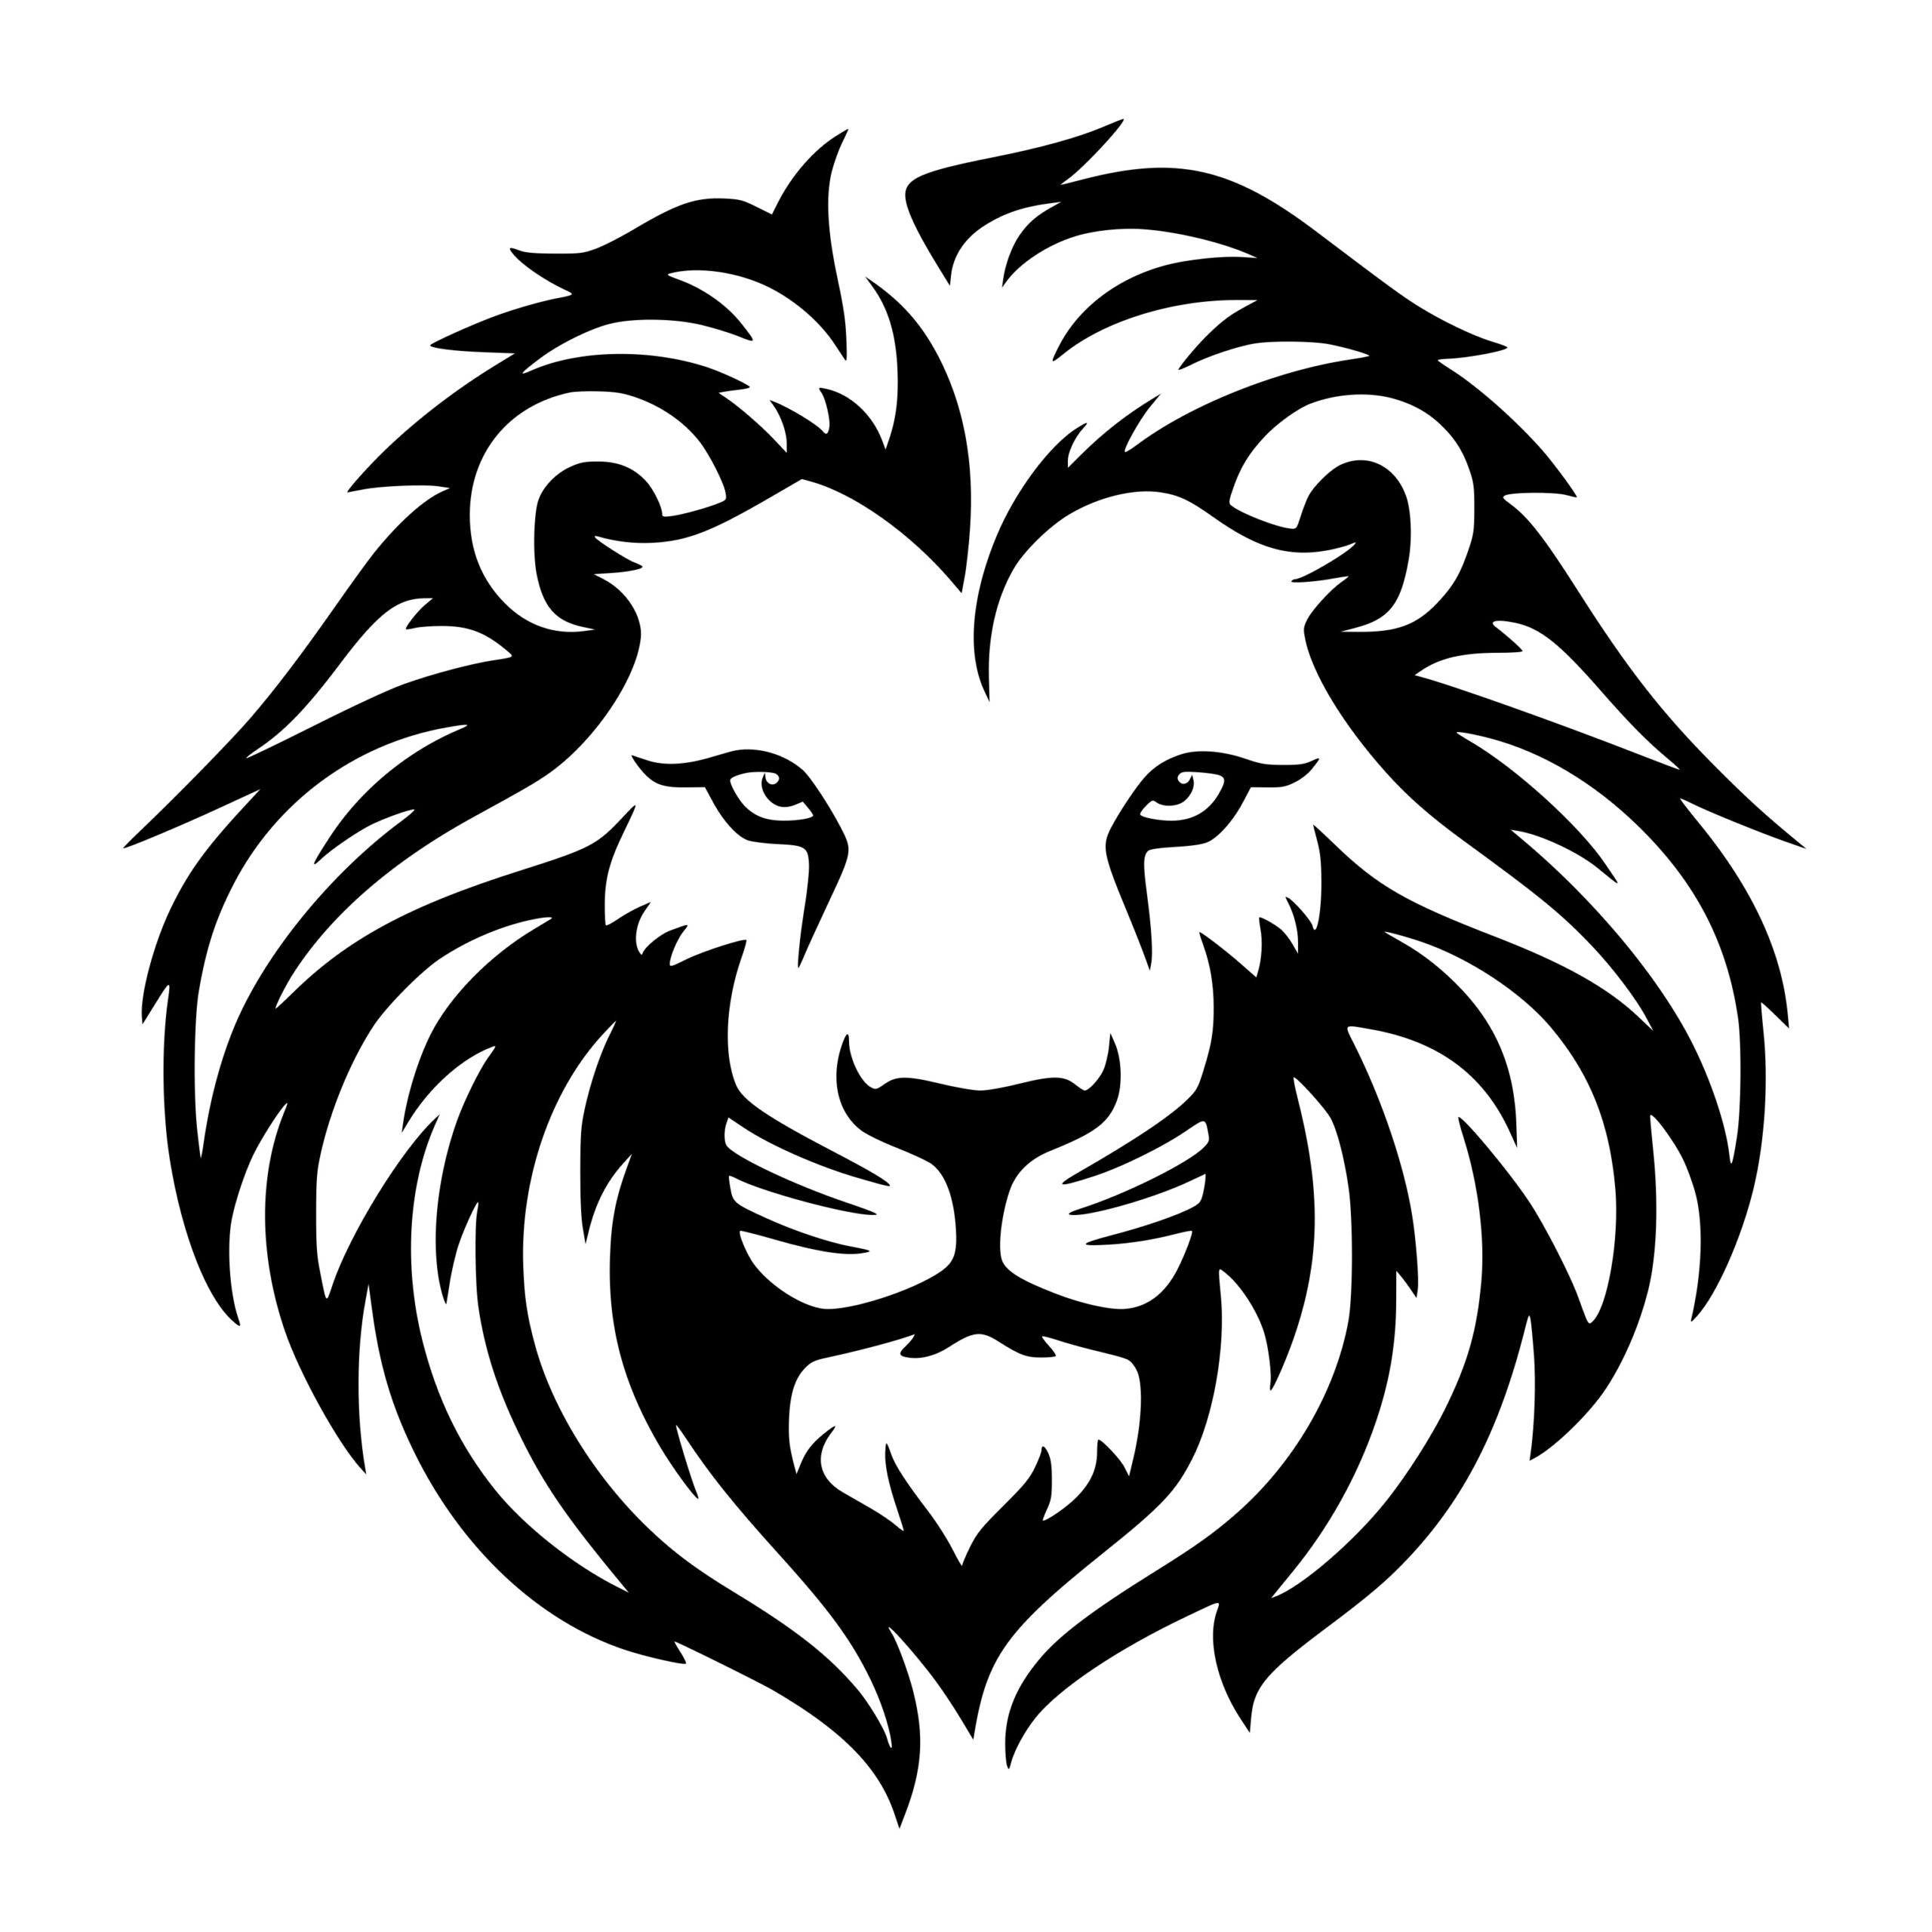 Regal Lion SVG Image: Perfect for Cricut, Silhouette, Laser Machines